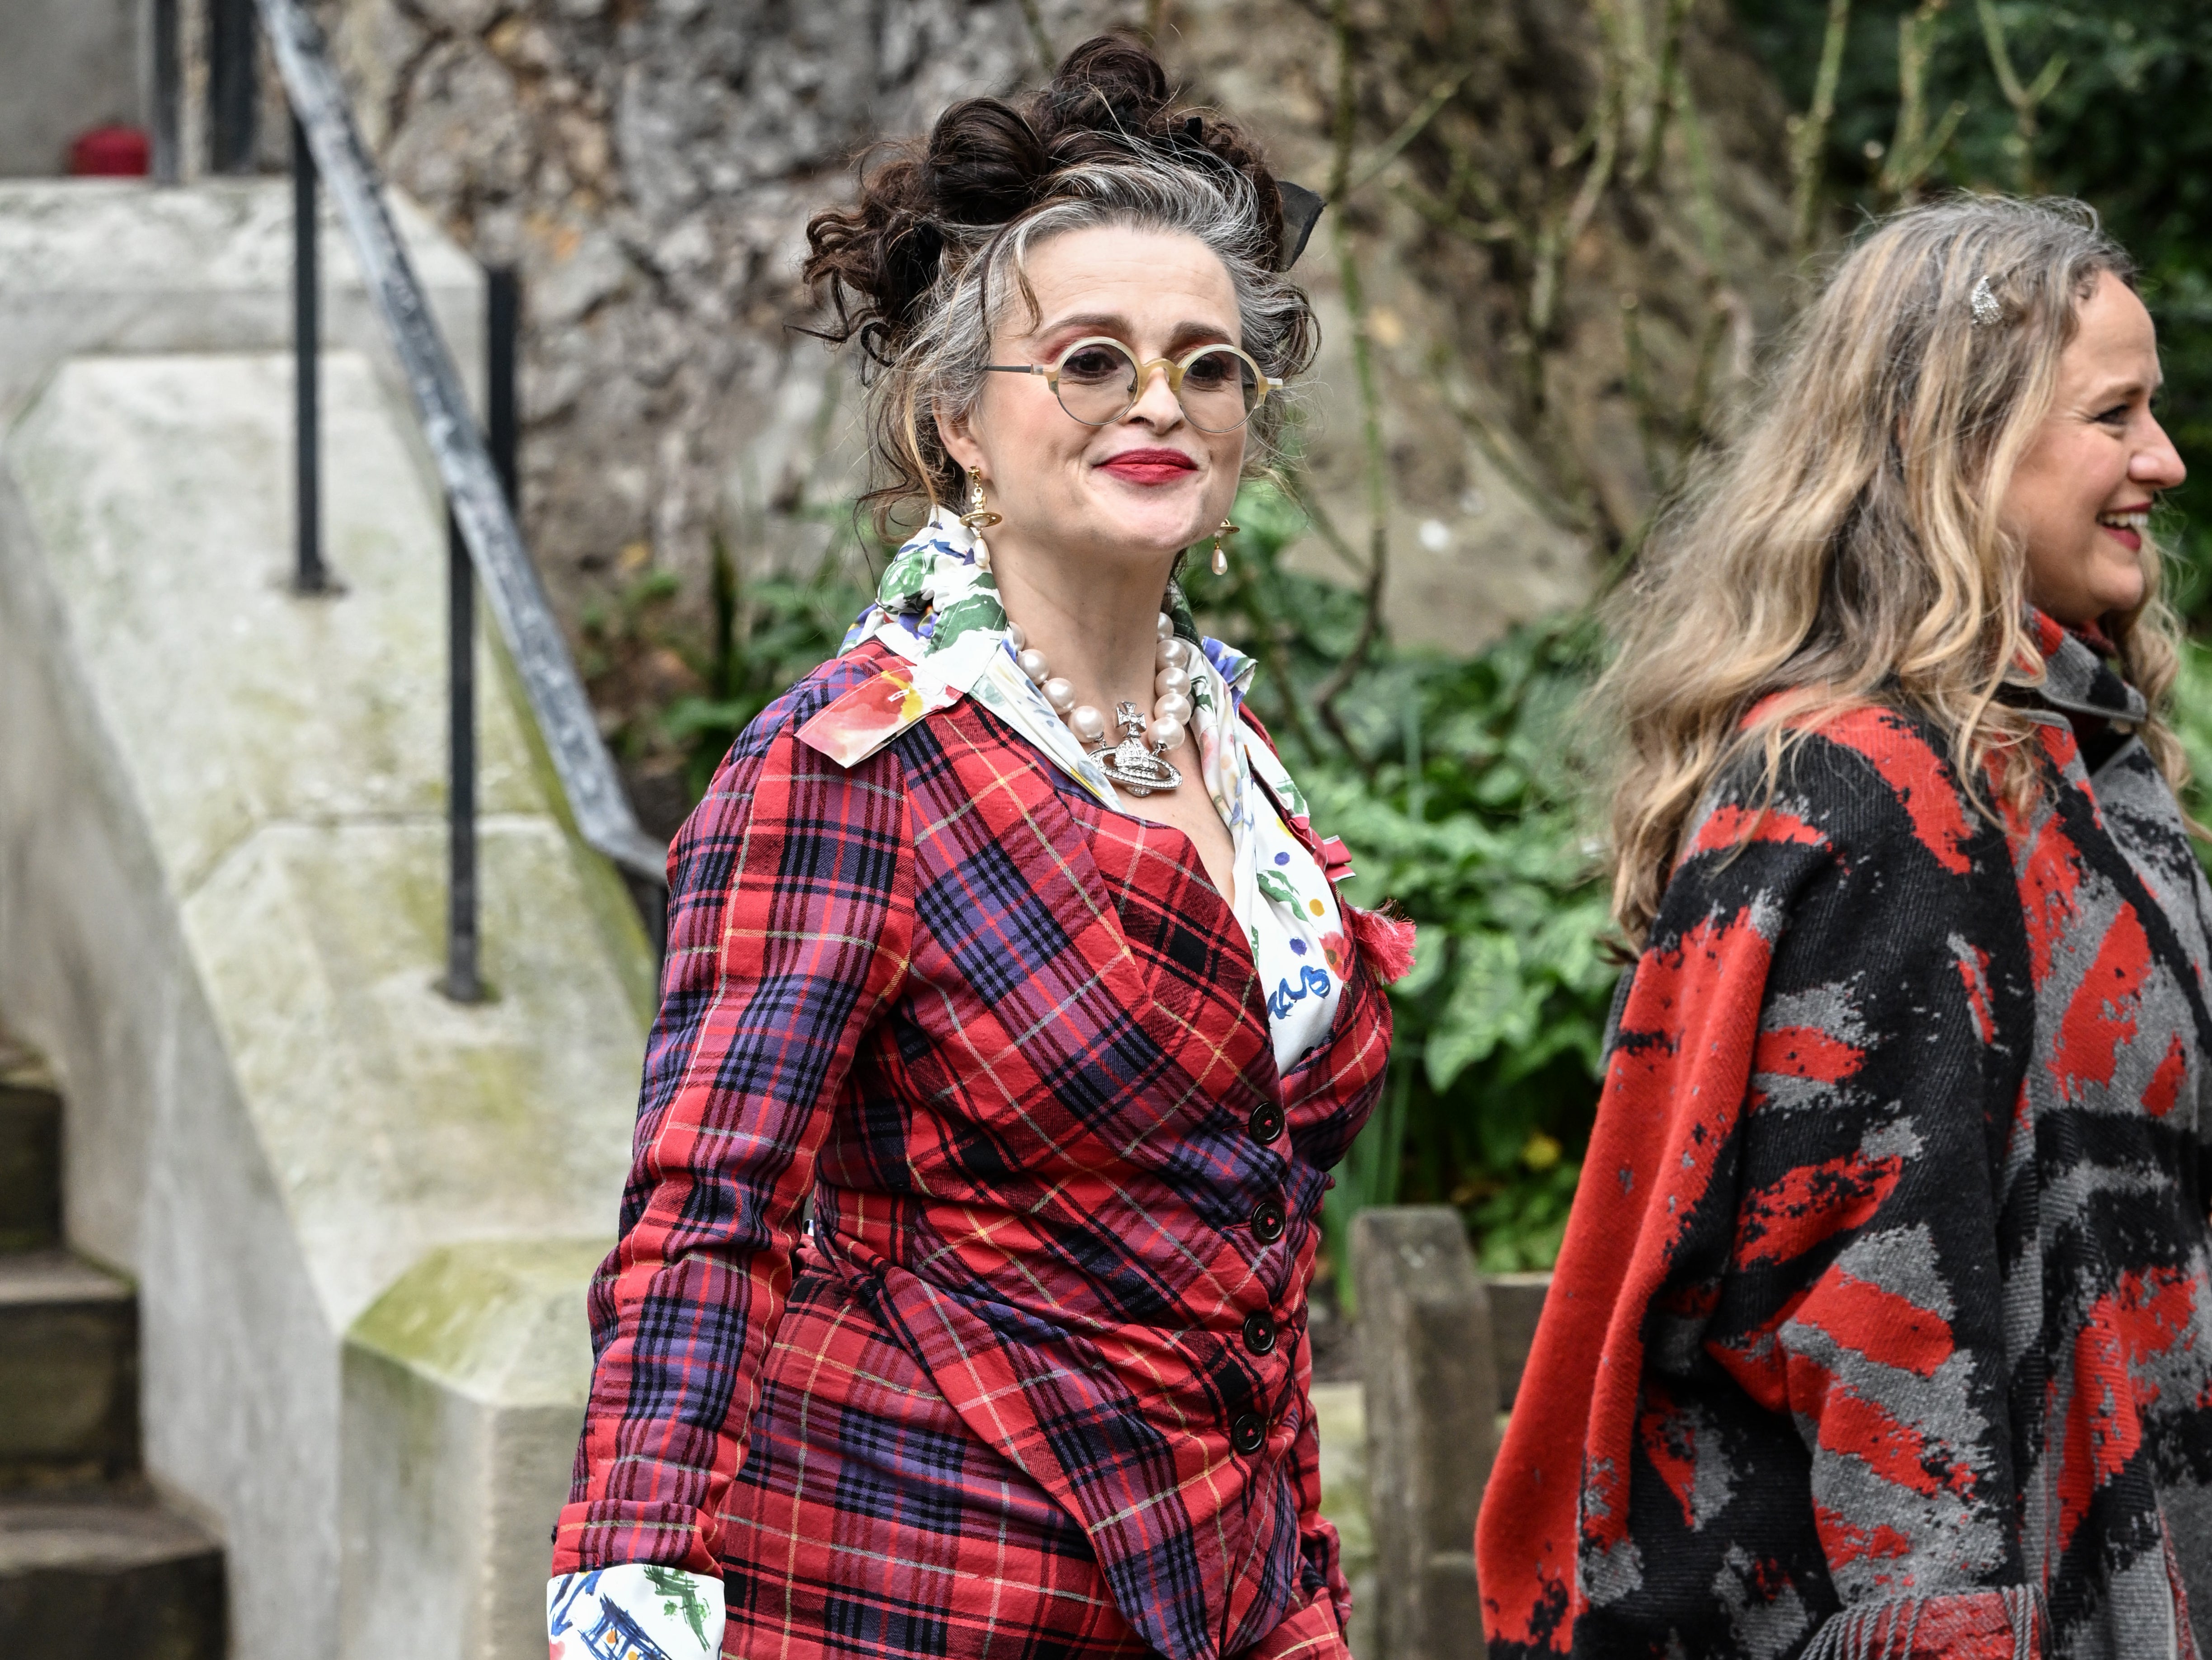 Fashion set wear Vivienne Westwood's designs to pay tribute